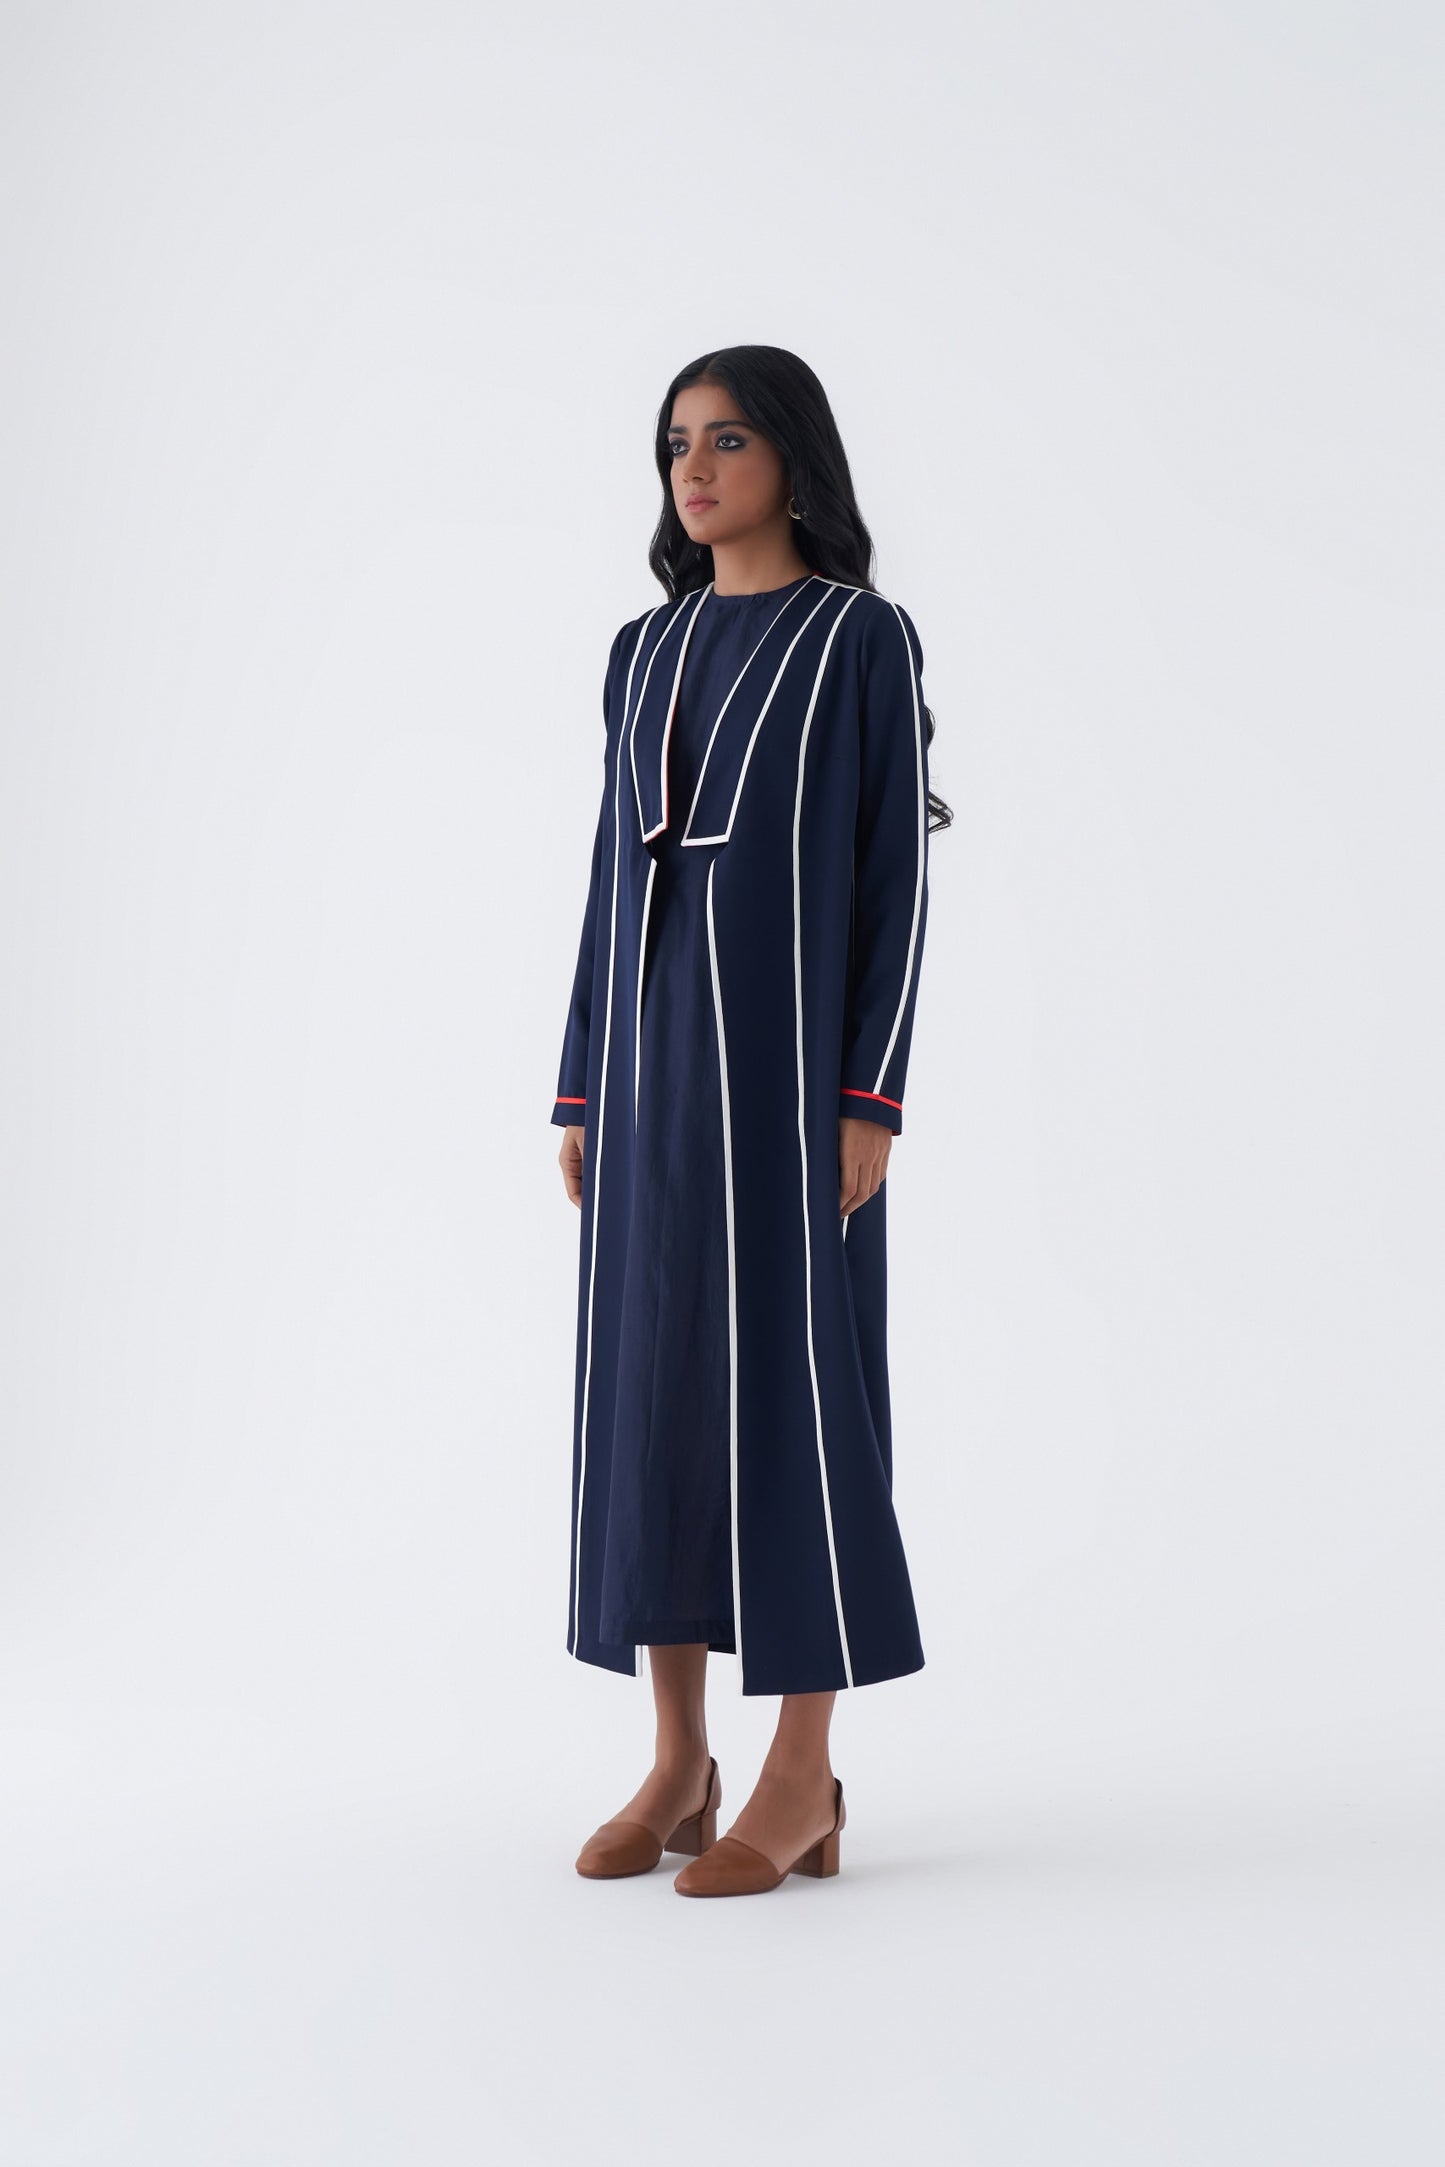 Sapphire Abaya with sleeves-24203